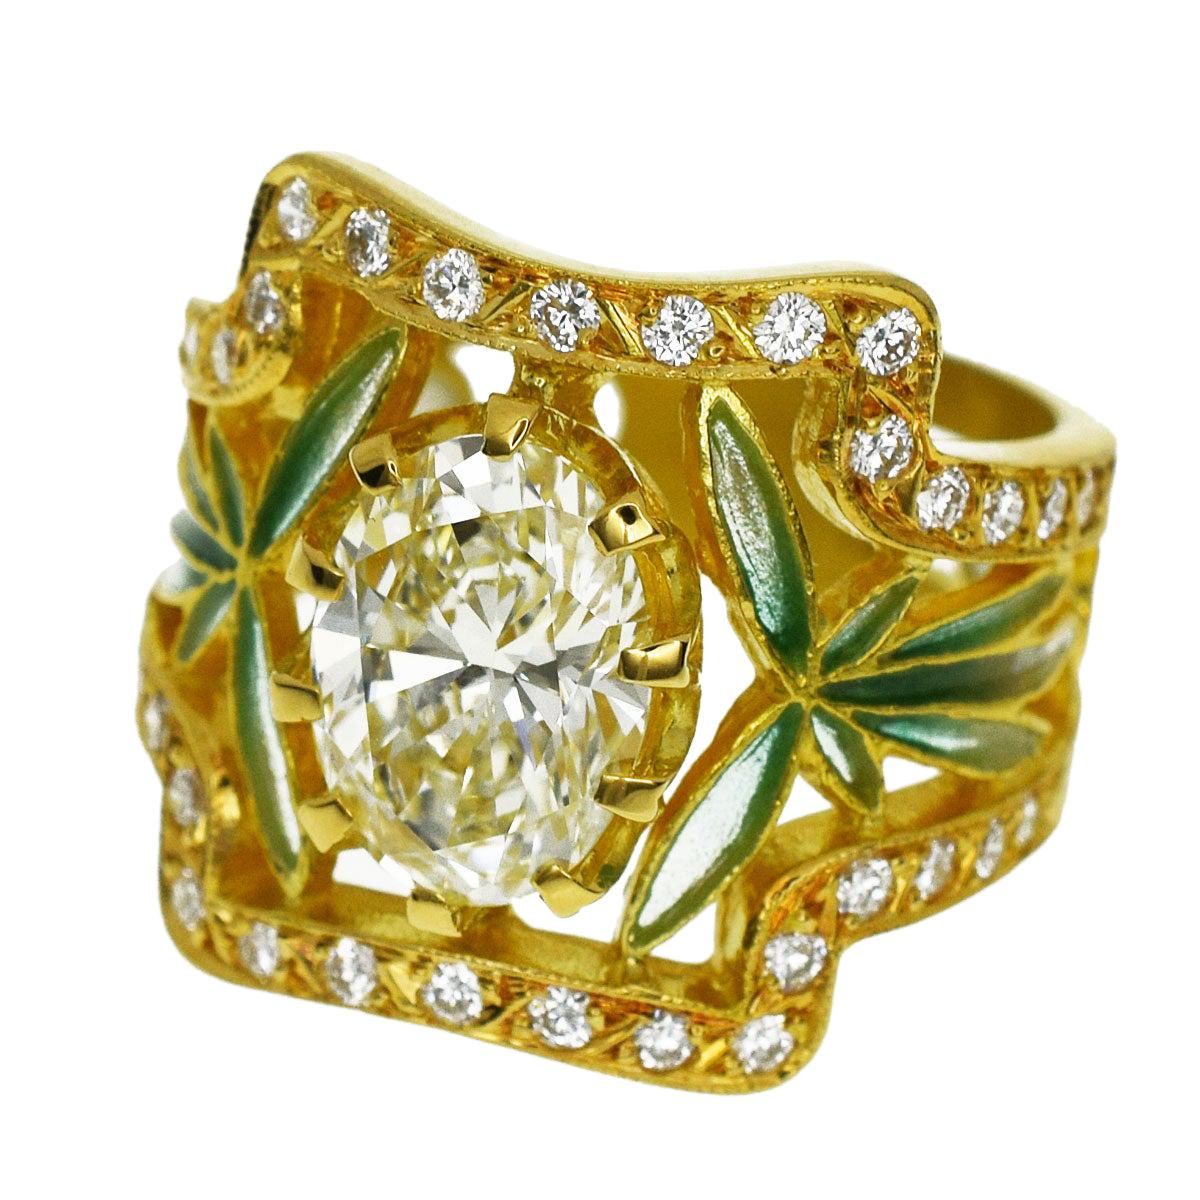 Masriera 2.29 Carat Diamond Cloisonne 18 Karat Yellow Gold Ring US 6 3/4